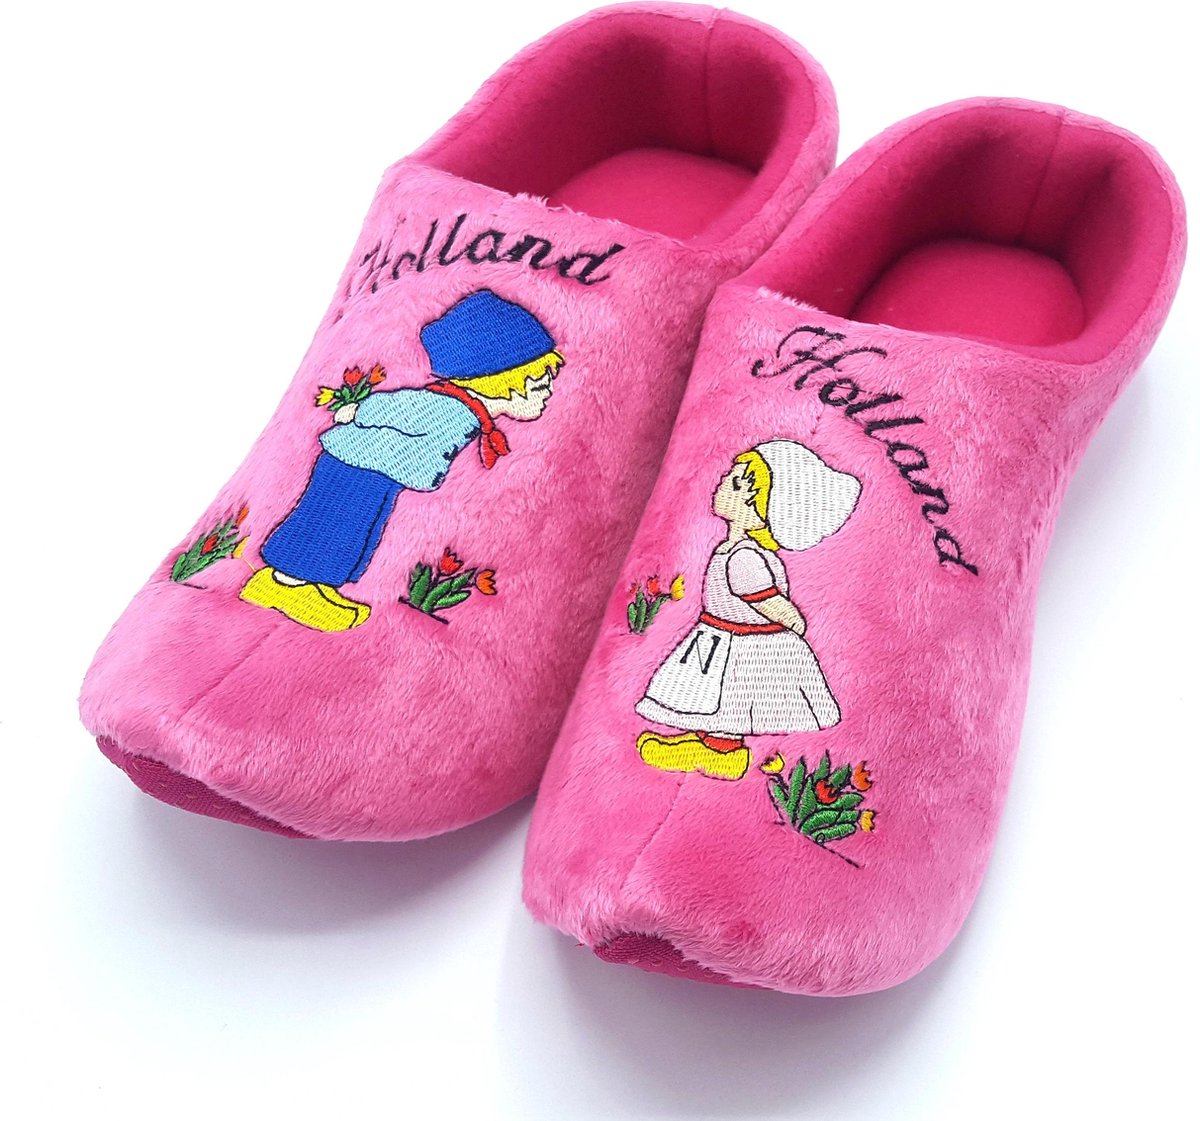 Holland slippers by Wilhelmus Klompsloffen Kissing couple